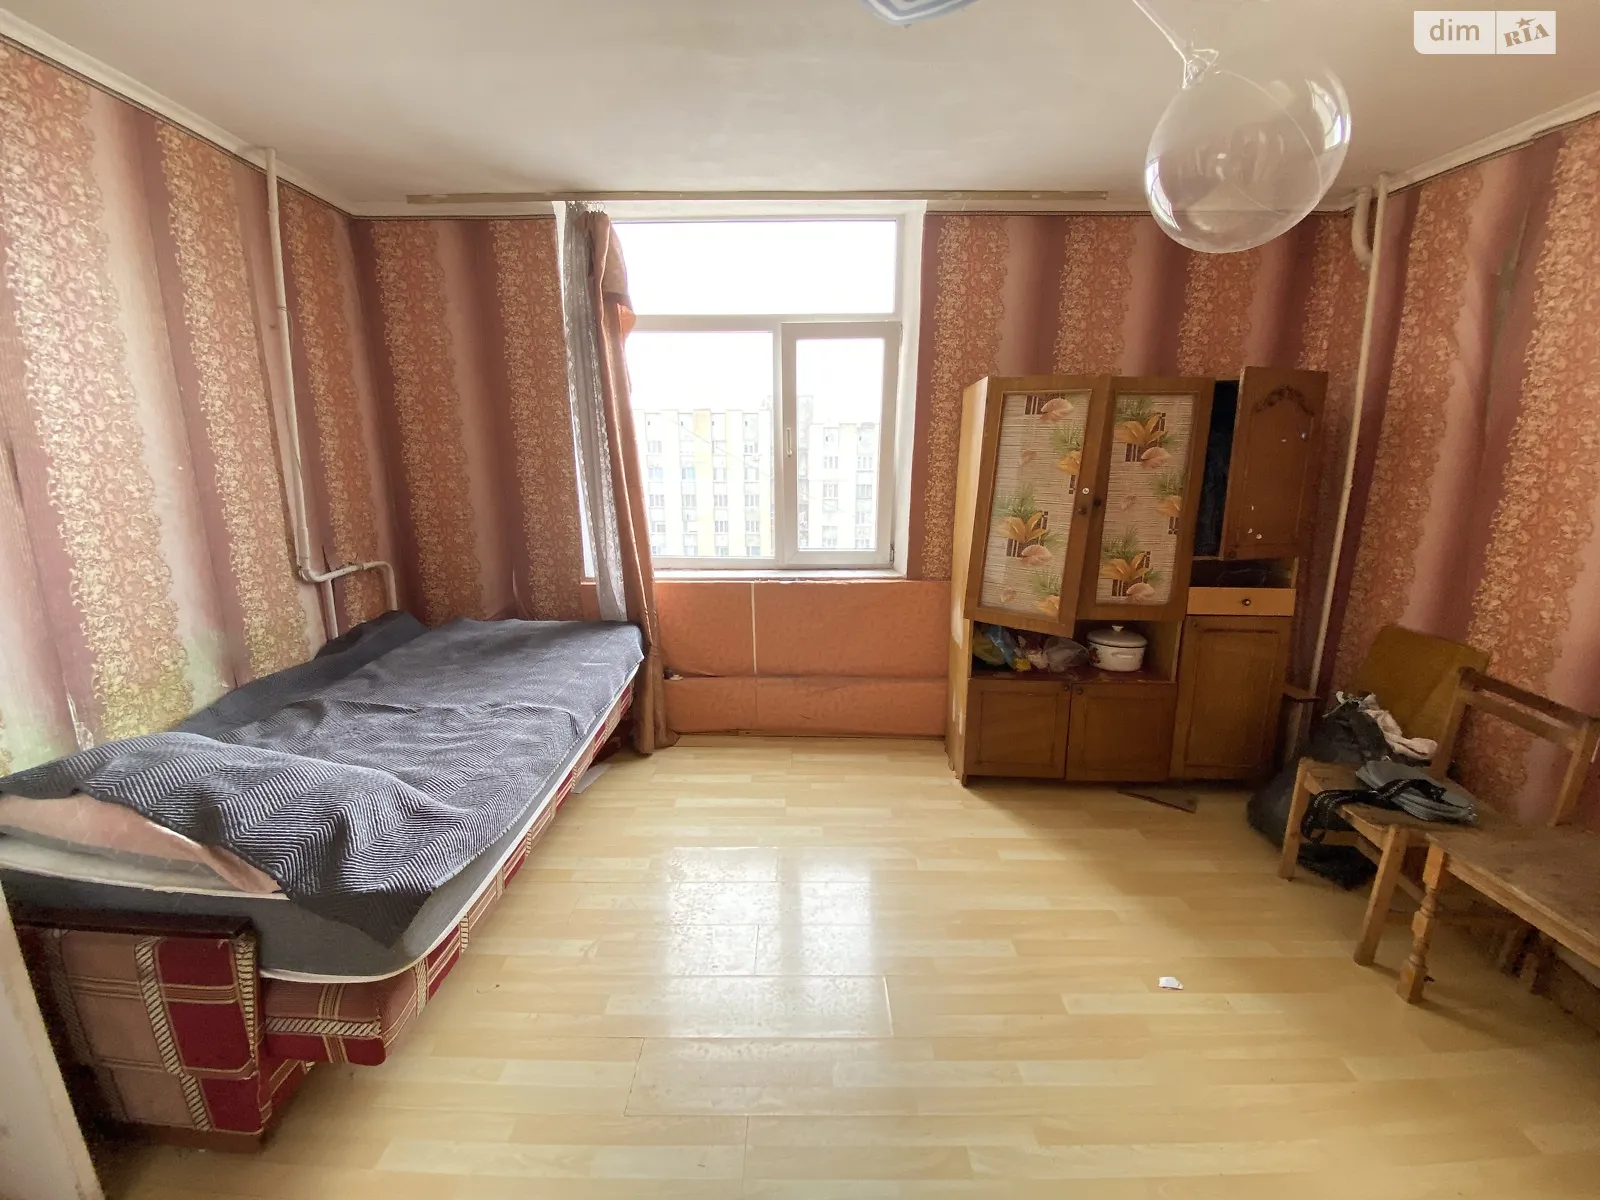 Продается комната 21 кв. м в Виннице, цена: 16499 $ - фото 1